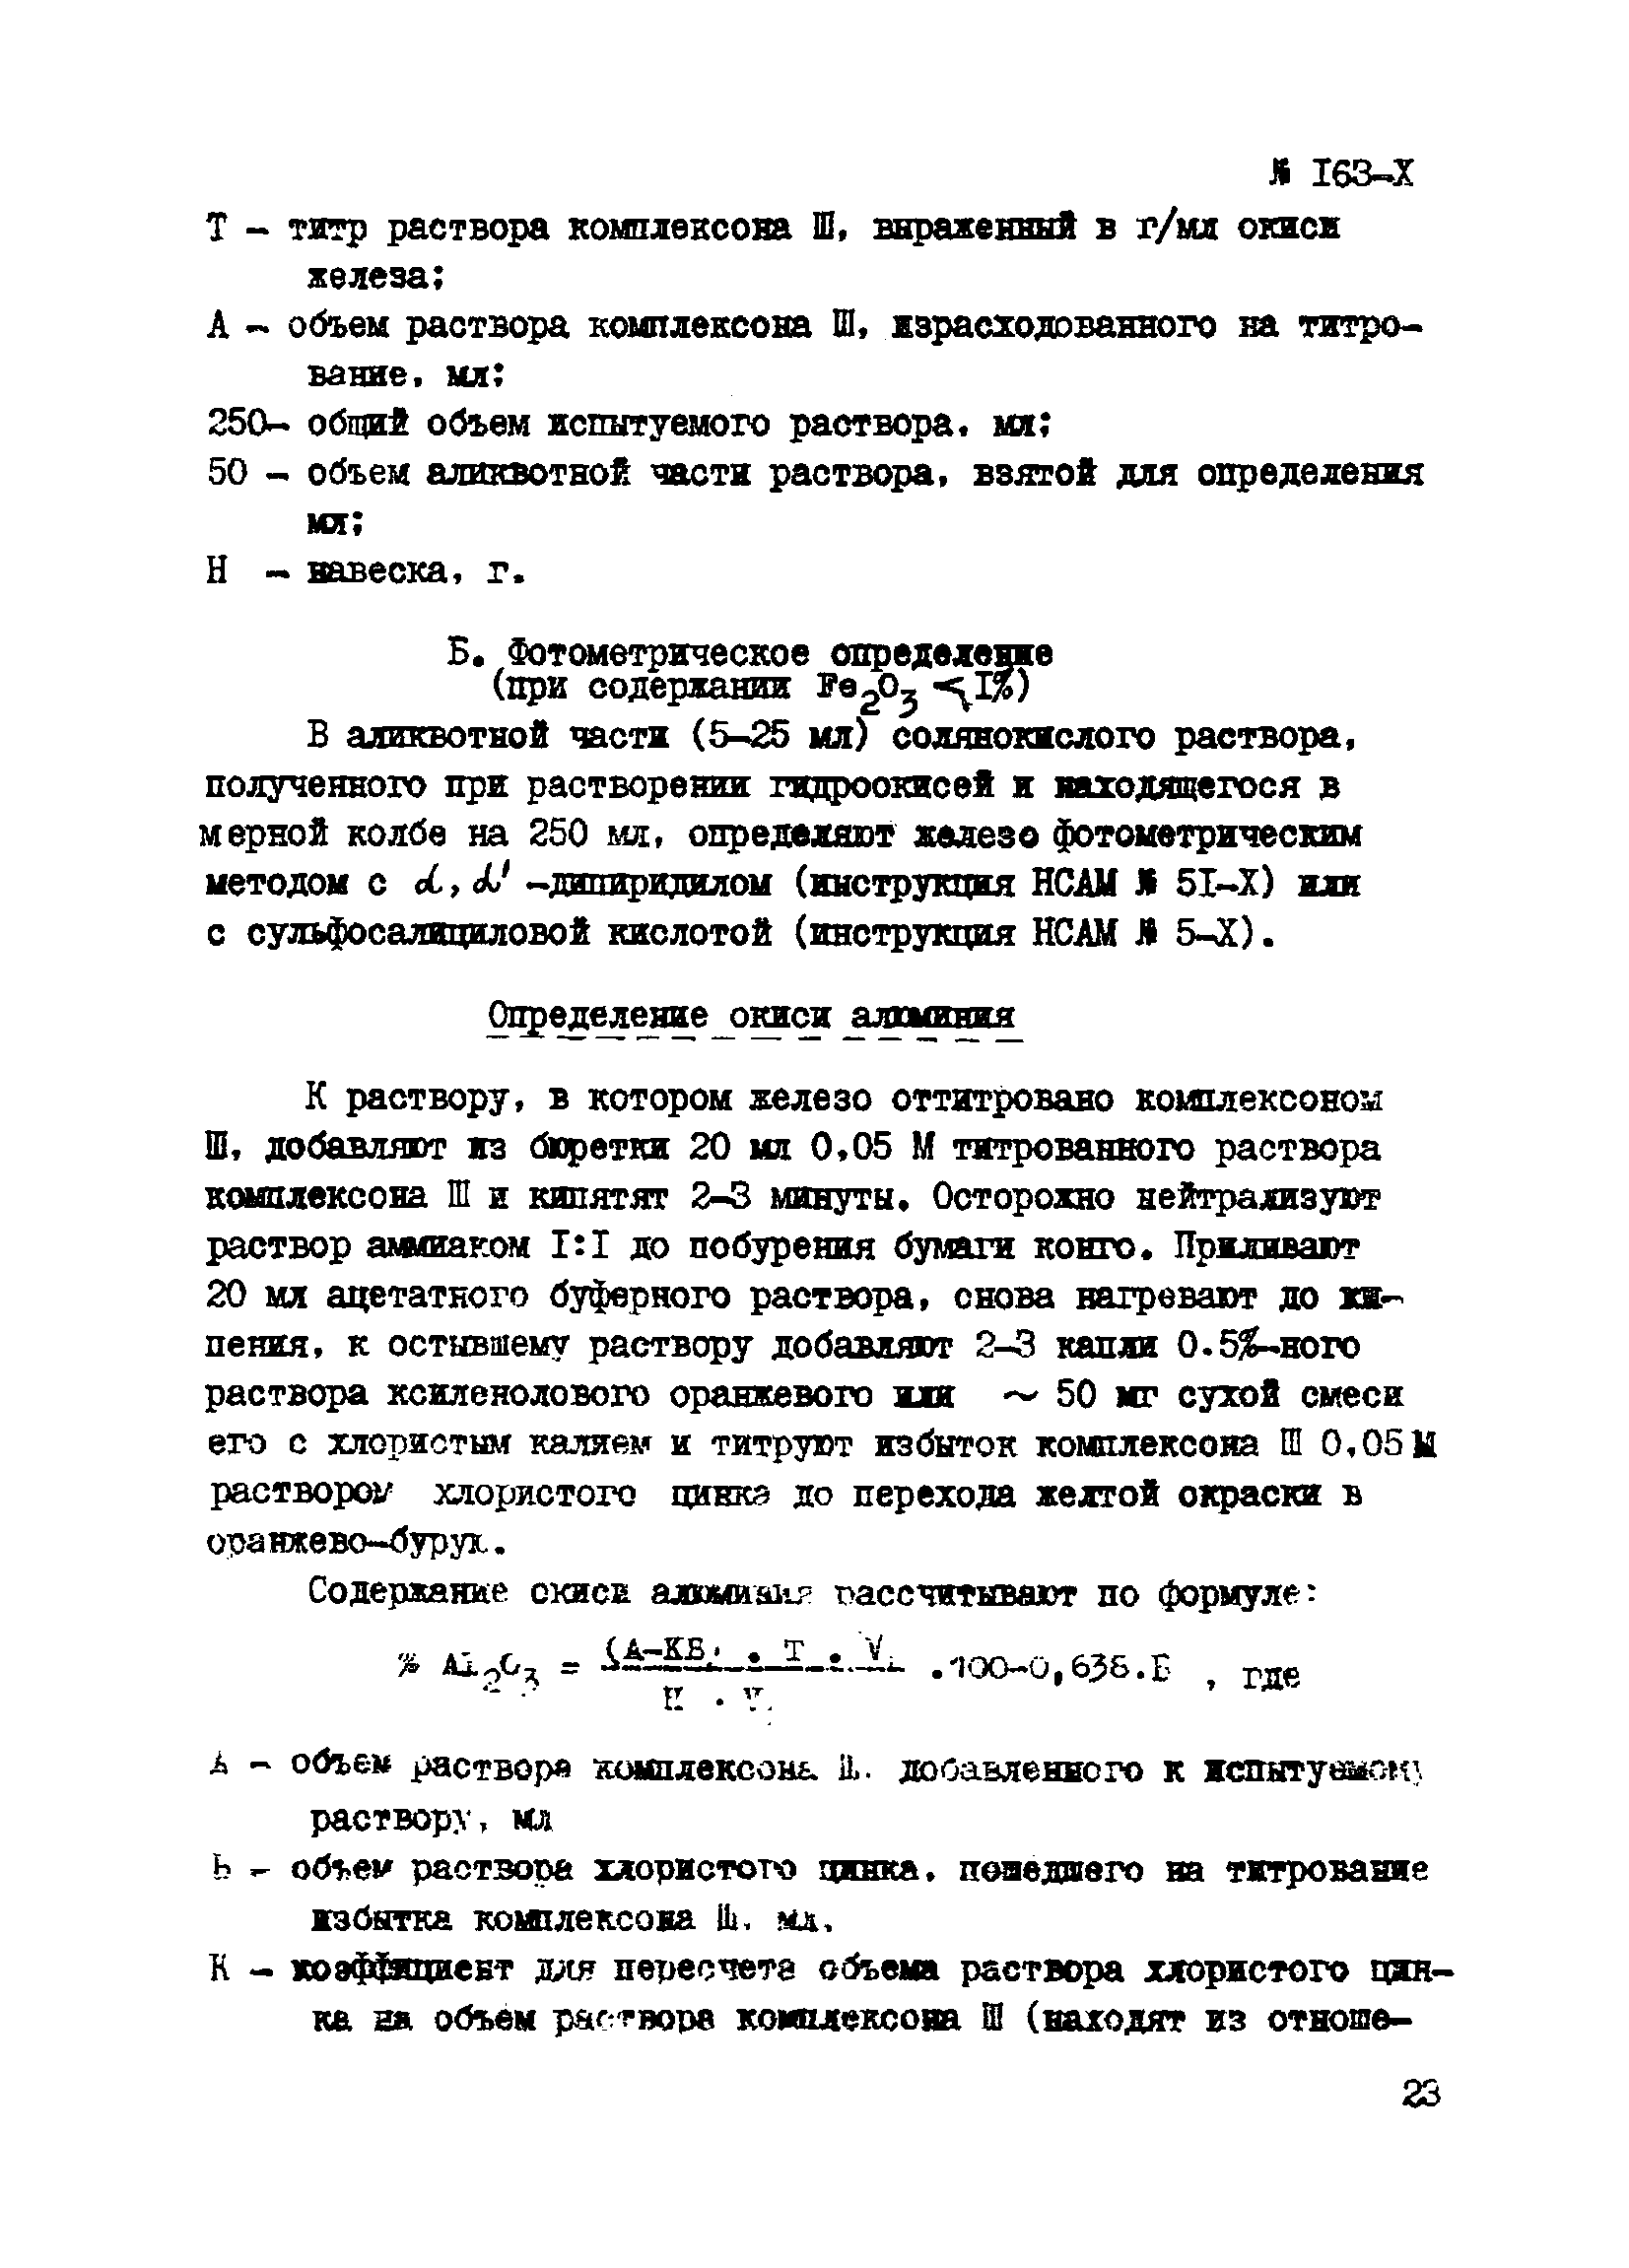 Инструкция НСАМ 163-Х